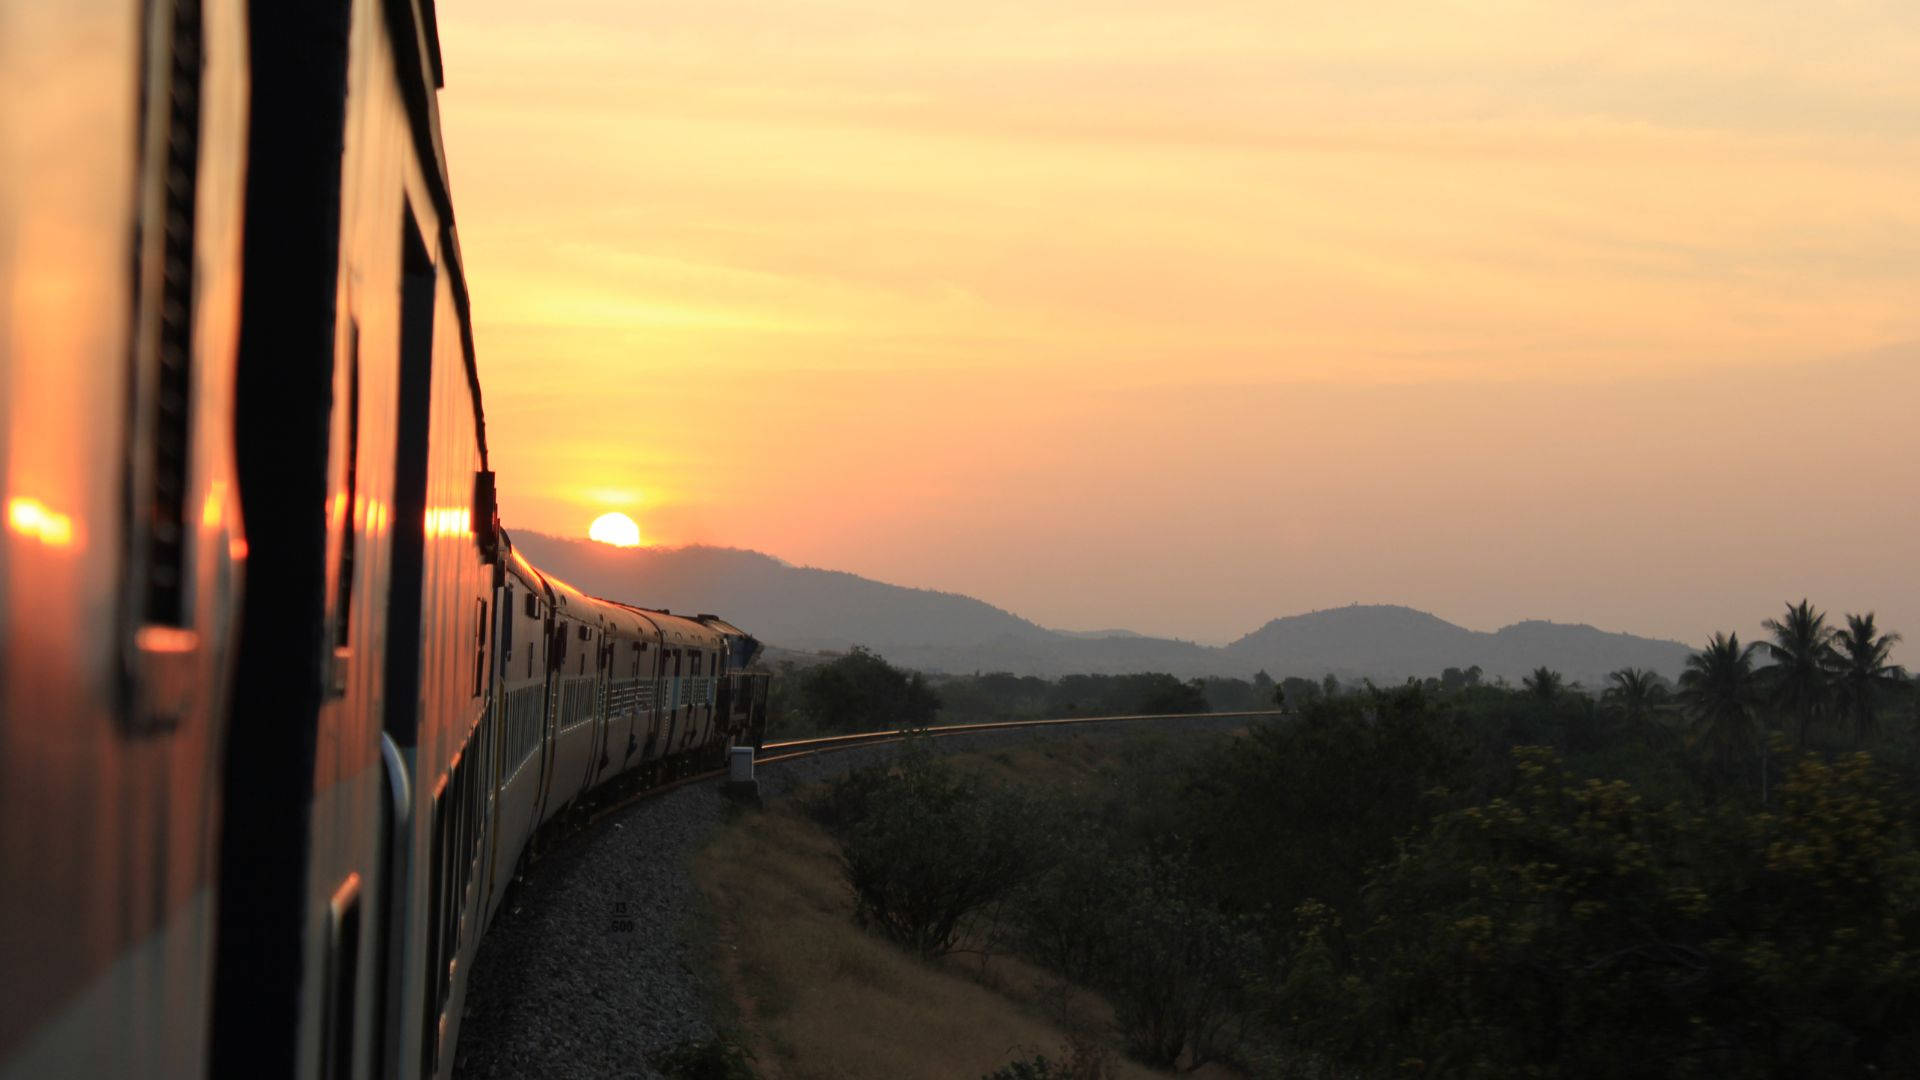 Train Journey During Sunset Wallpaper